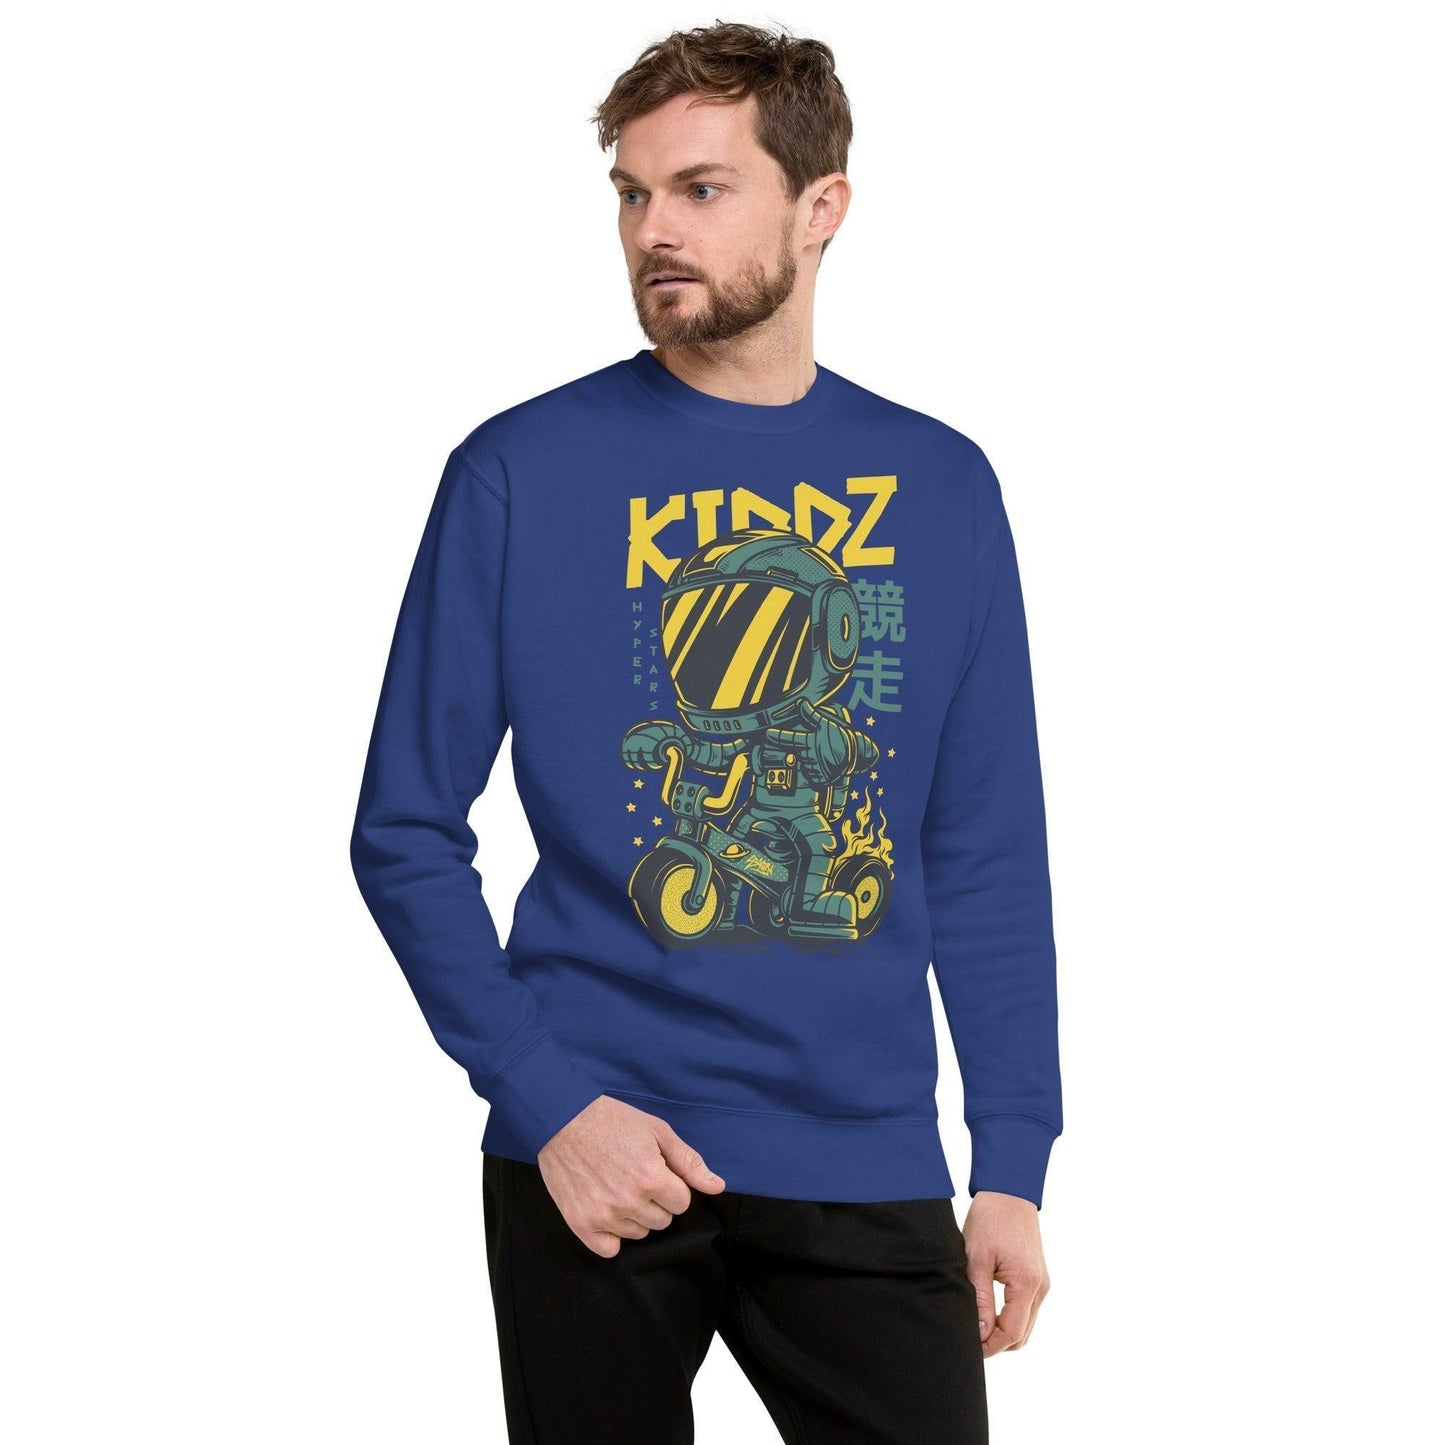 Kiddz Pullover -- Kiddz Pullover - undefined Pullover | JLR Design